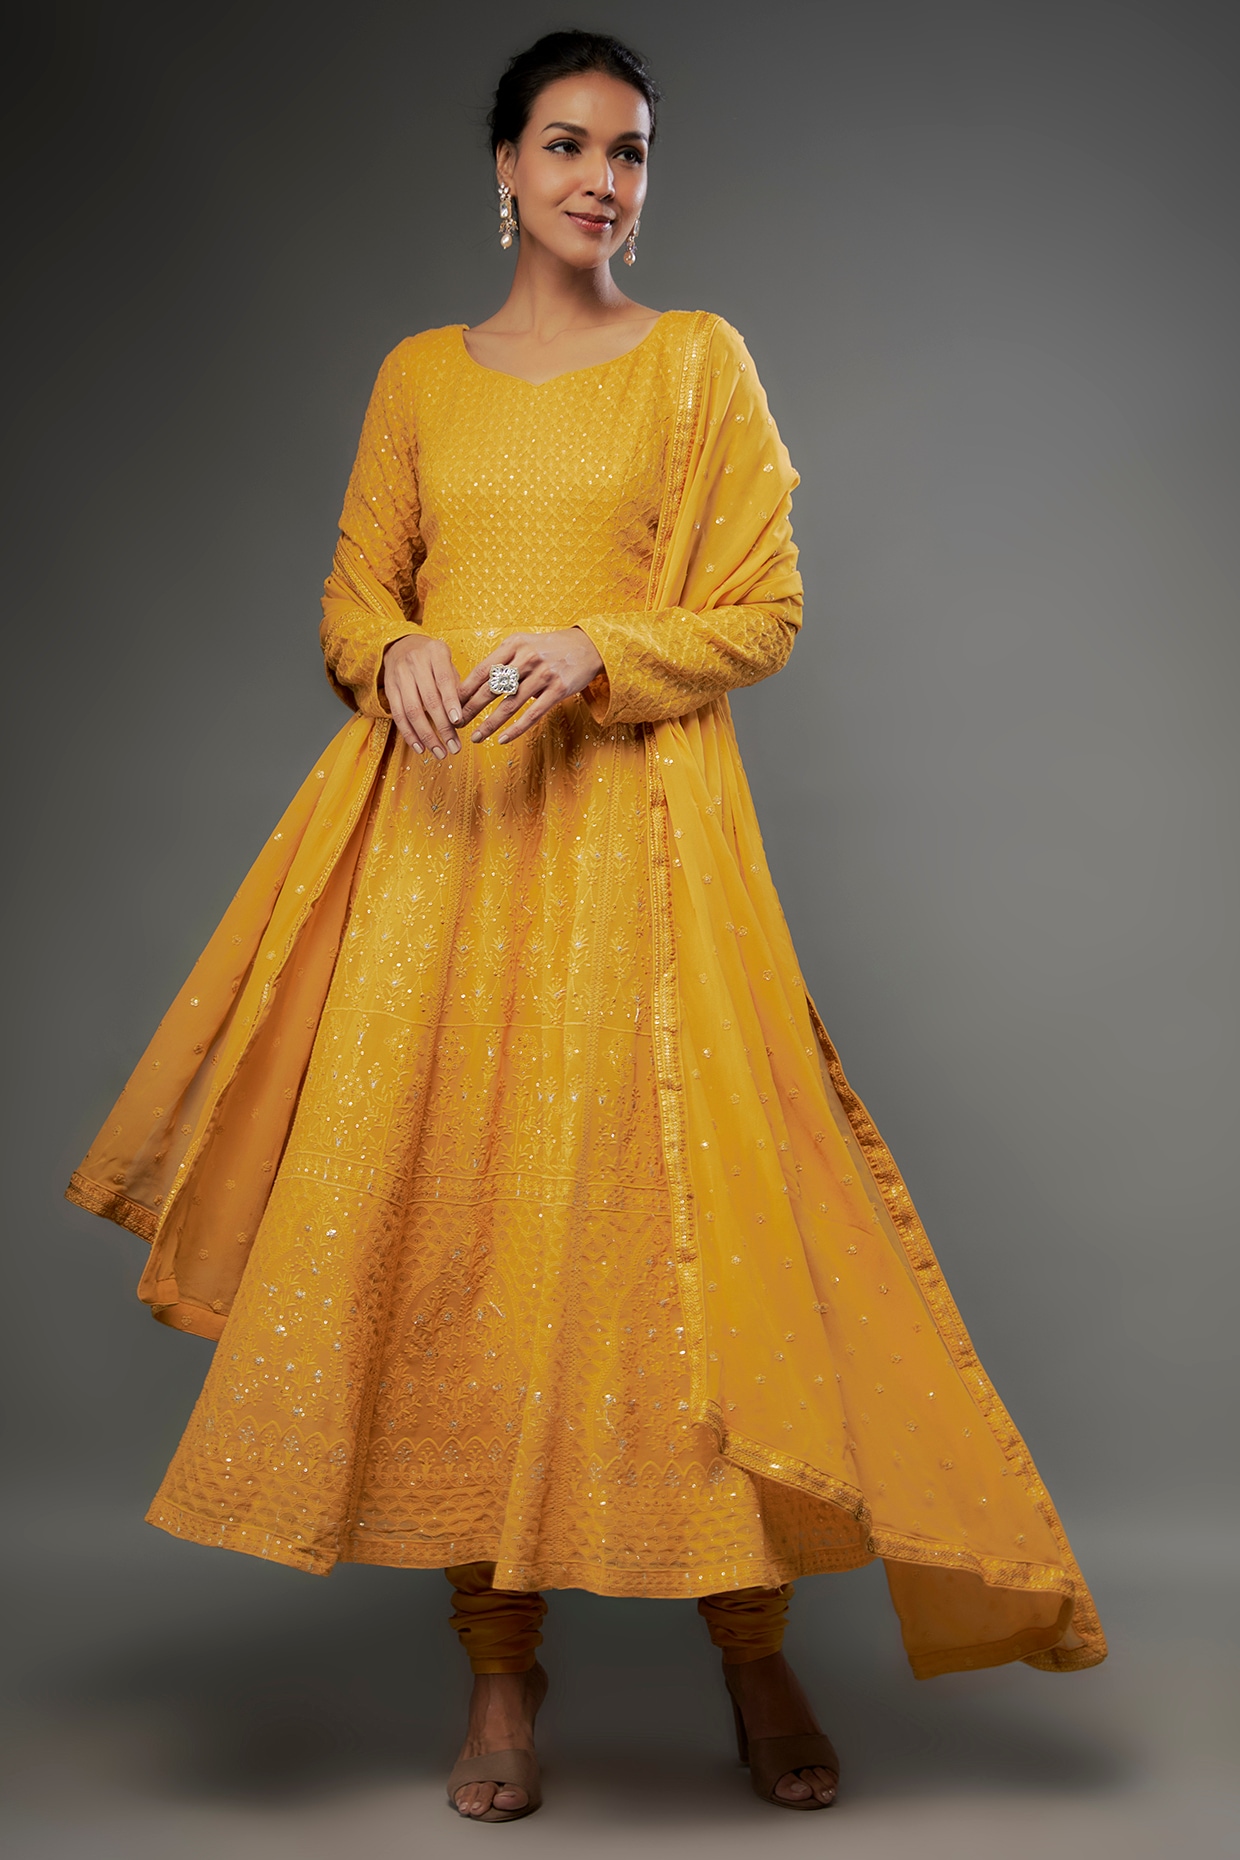 Designer Maroon Colour Ethnic Anarkali Dress For Beautiful Wedding Looks -  KSM PRINTS - 4206216